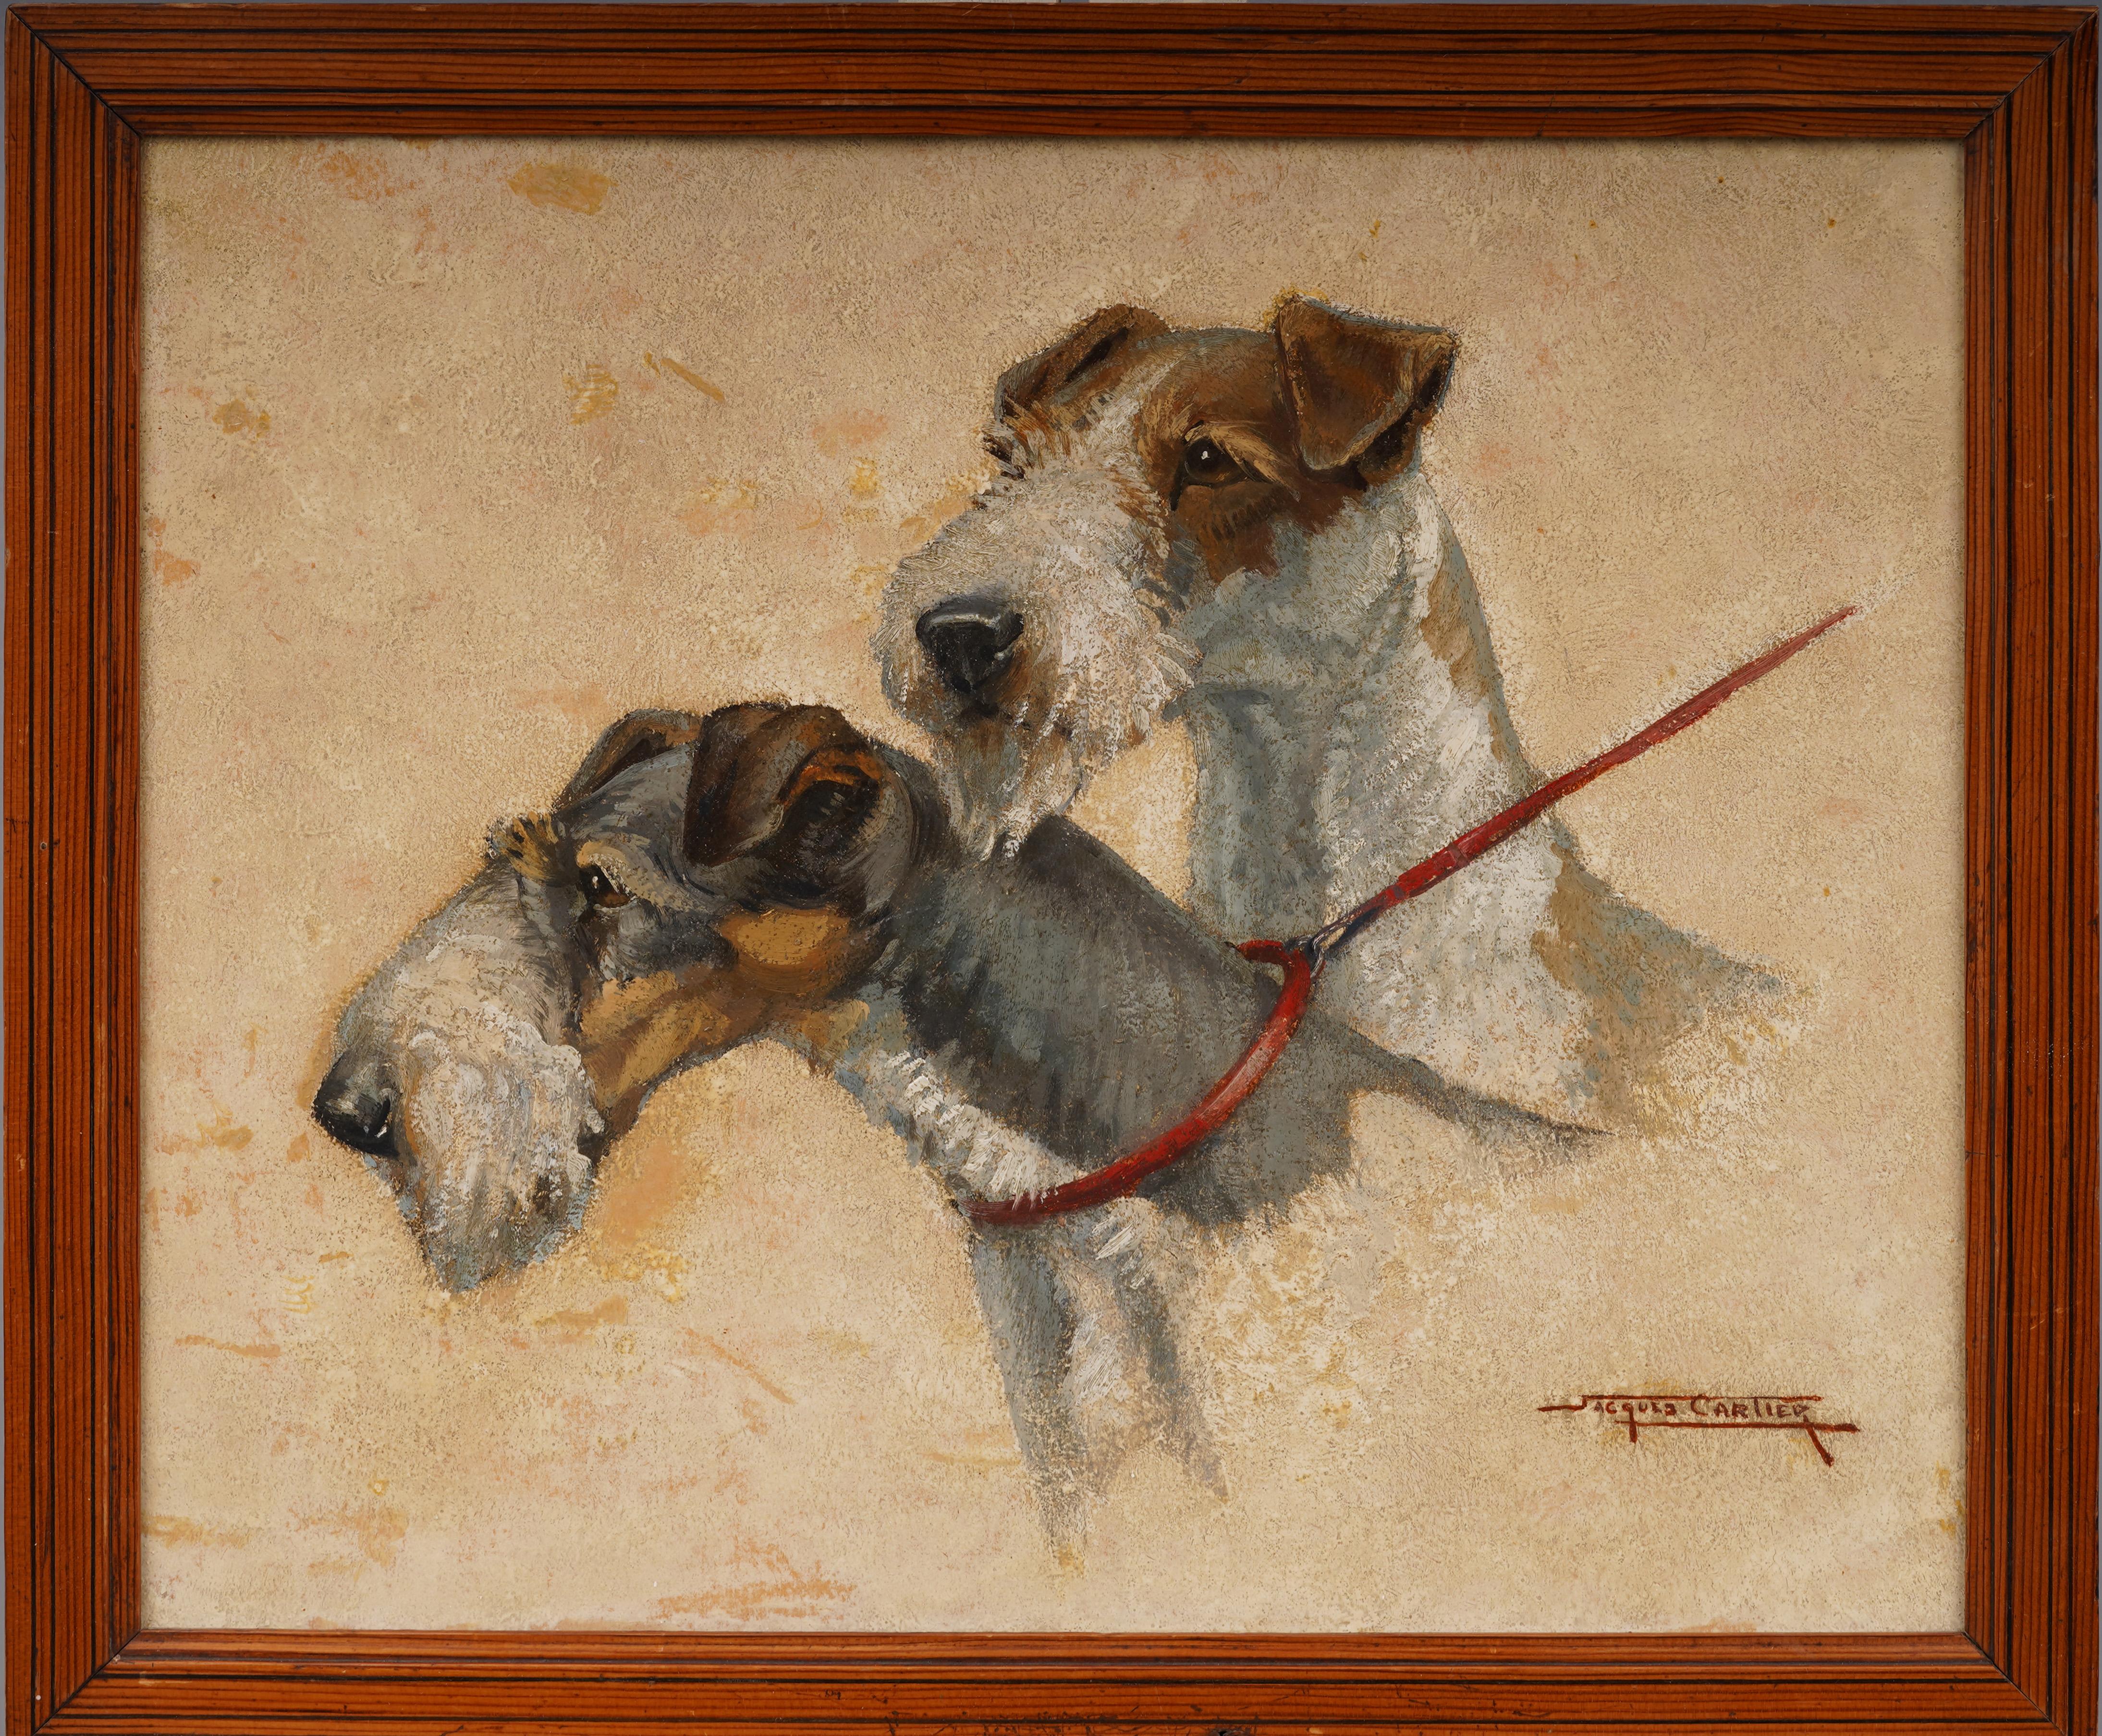 Jacques Cartier Landscape Painting - Antique French Realist Art Deco Terrier Dog Portrait Framed Signed Oil Painting